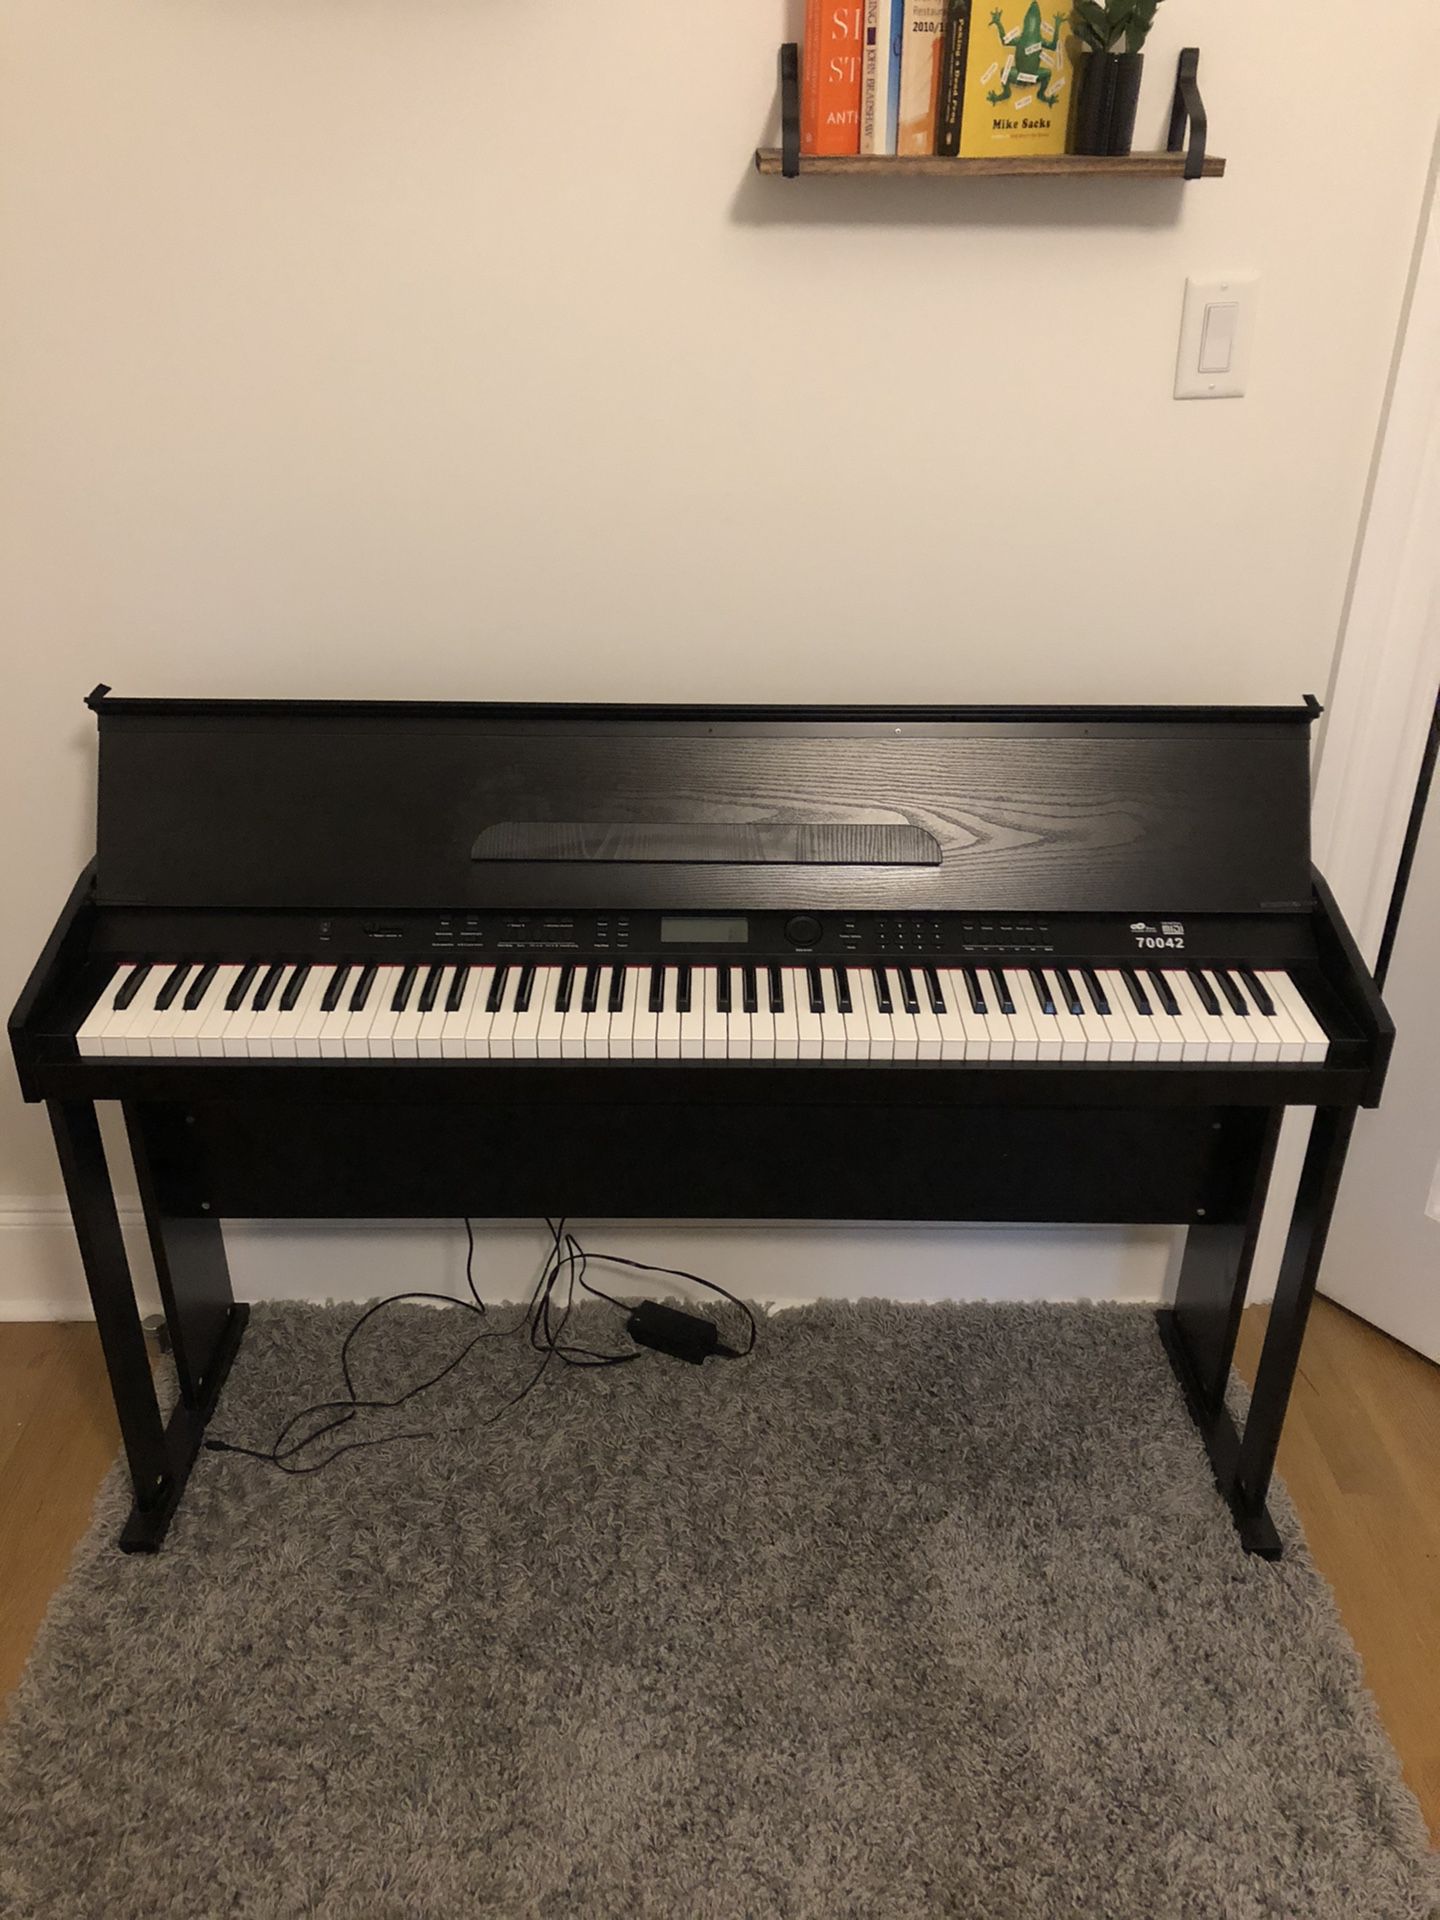 VidaXL 88 Key Digital Piano Keyboard